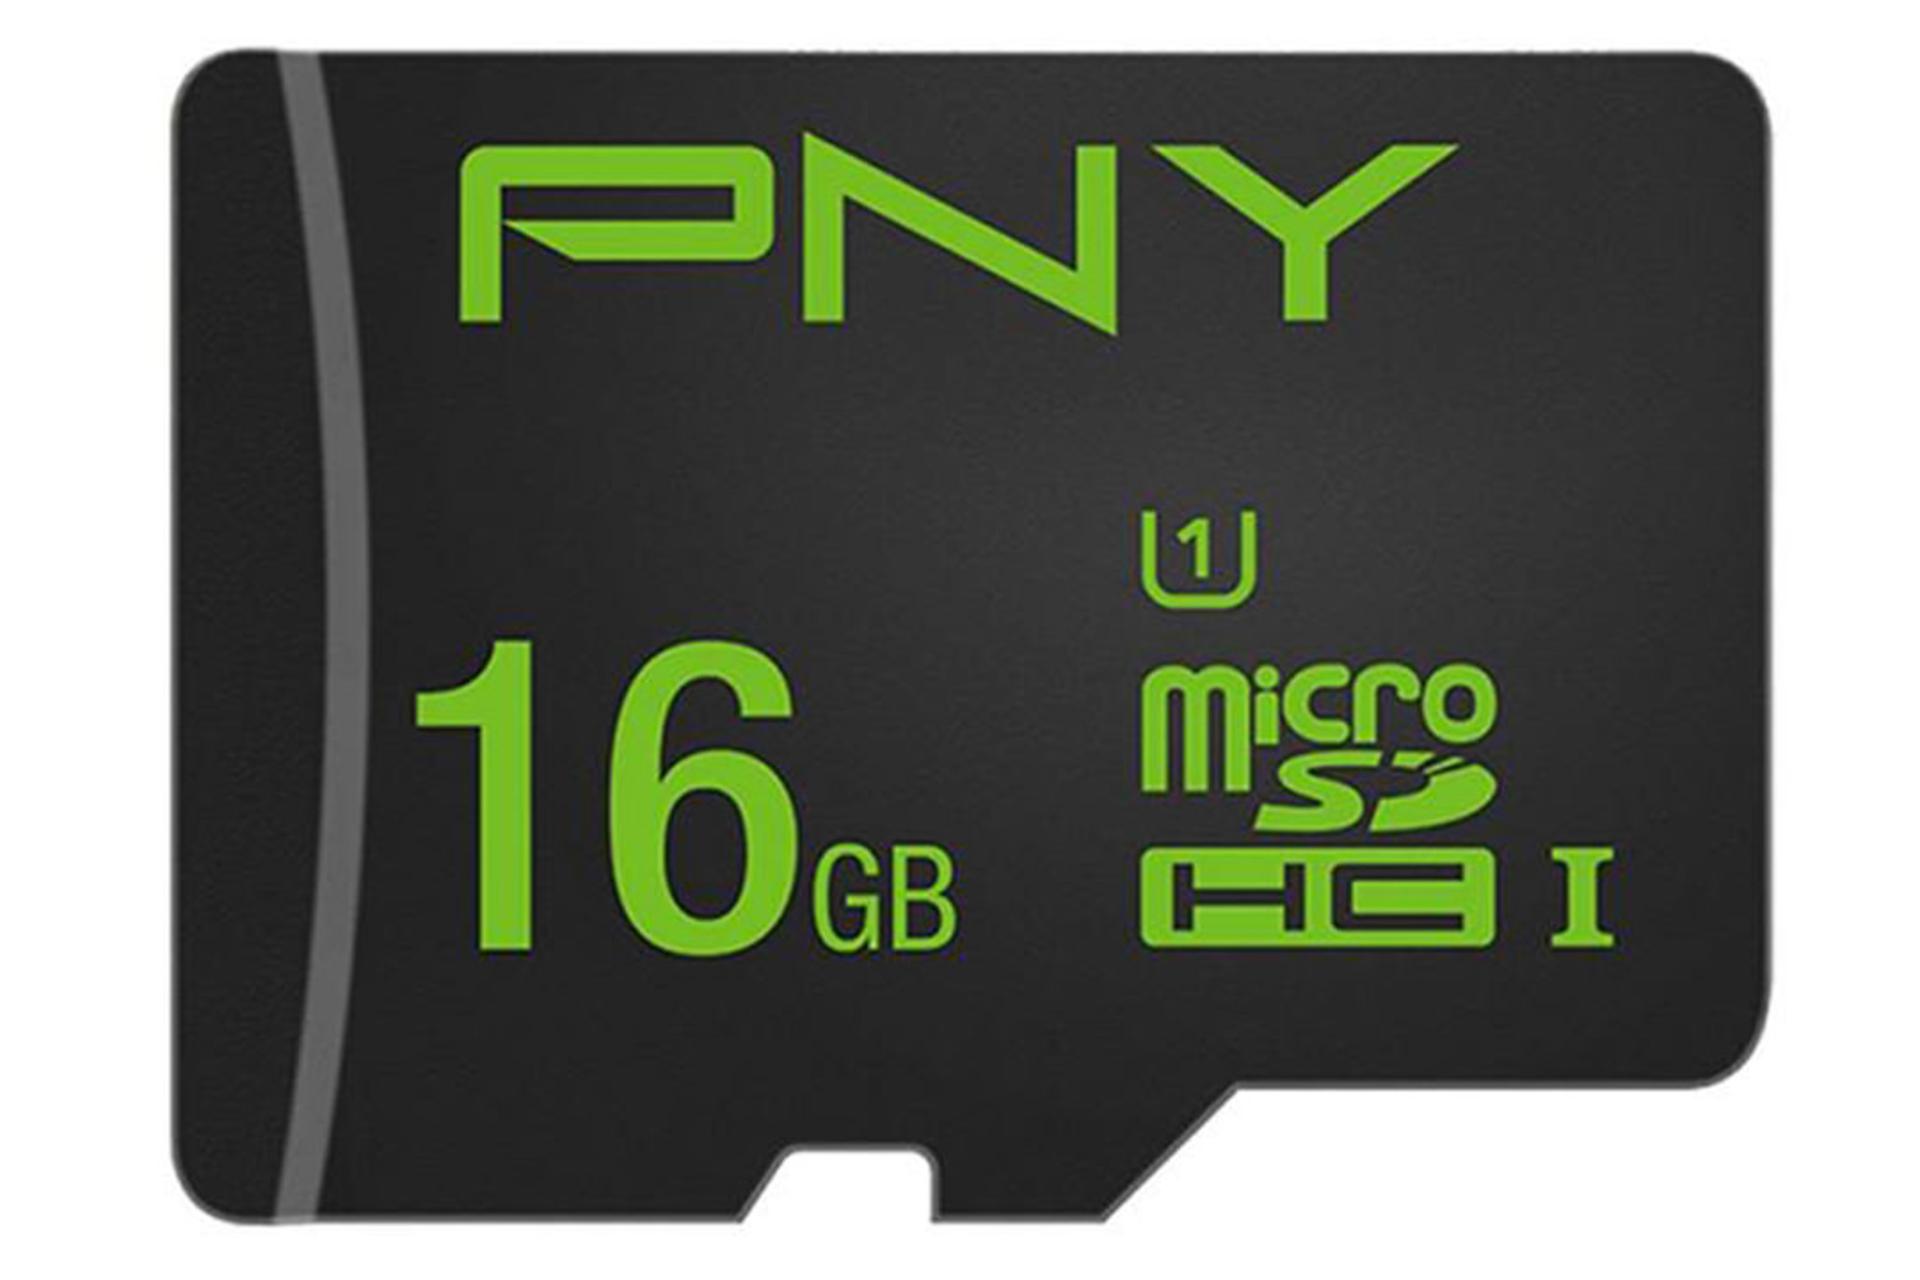 PNY U1 microSDHC Class 10 UHS-I U1 16GB